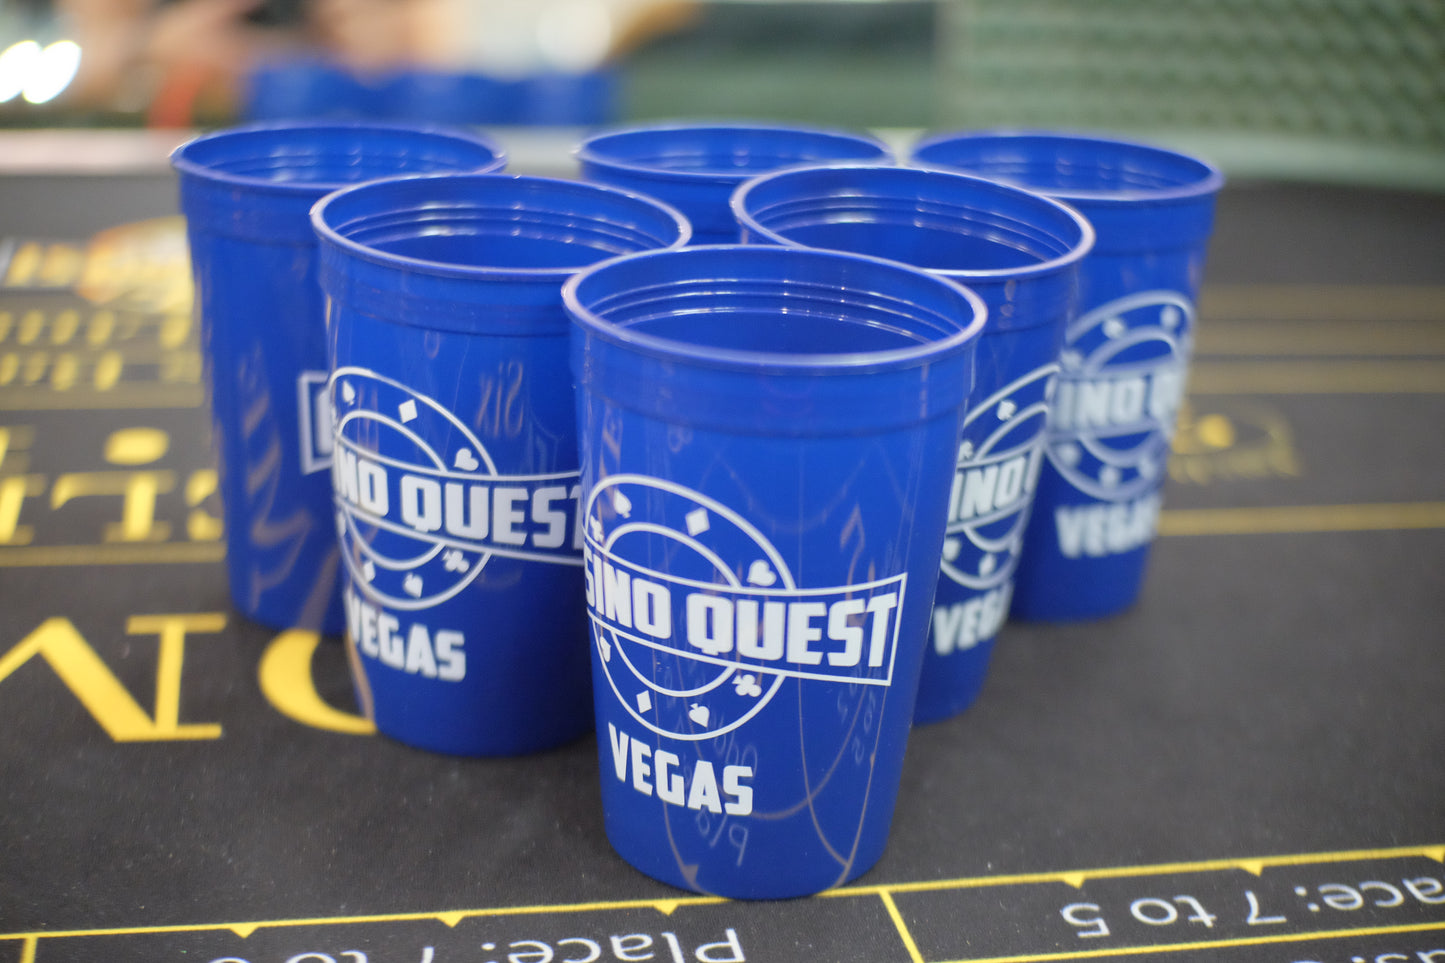 Casino Quest Official Beer Pong Set